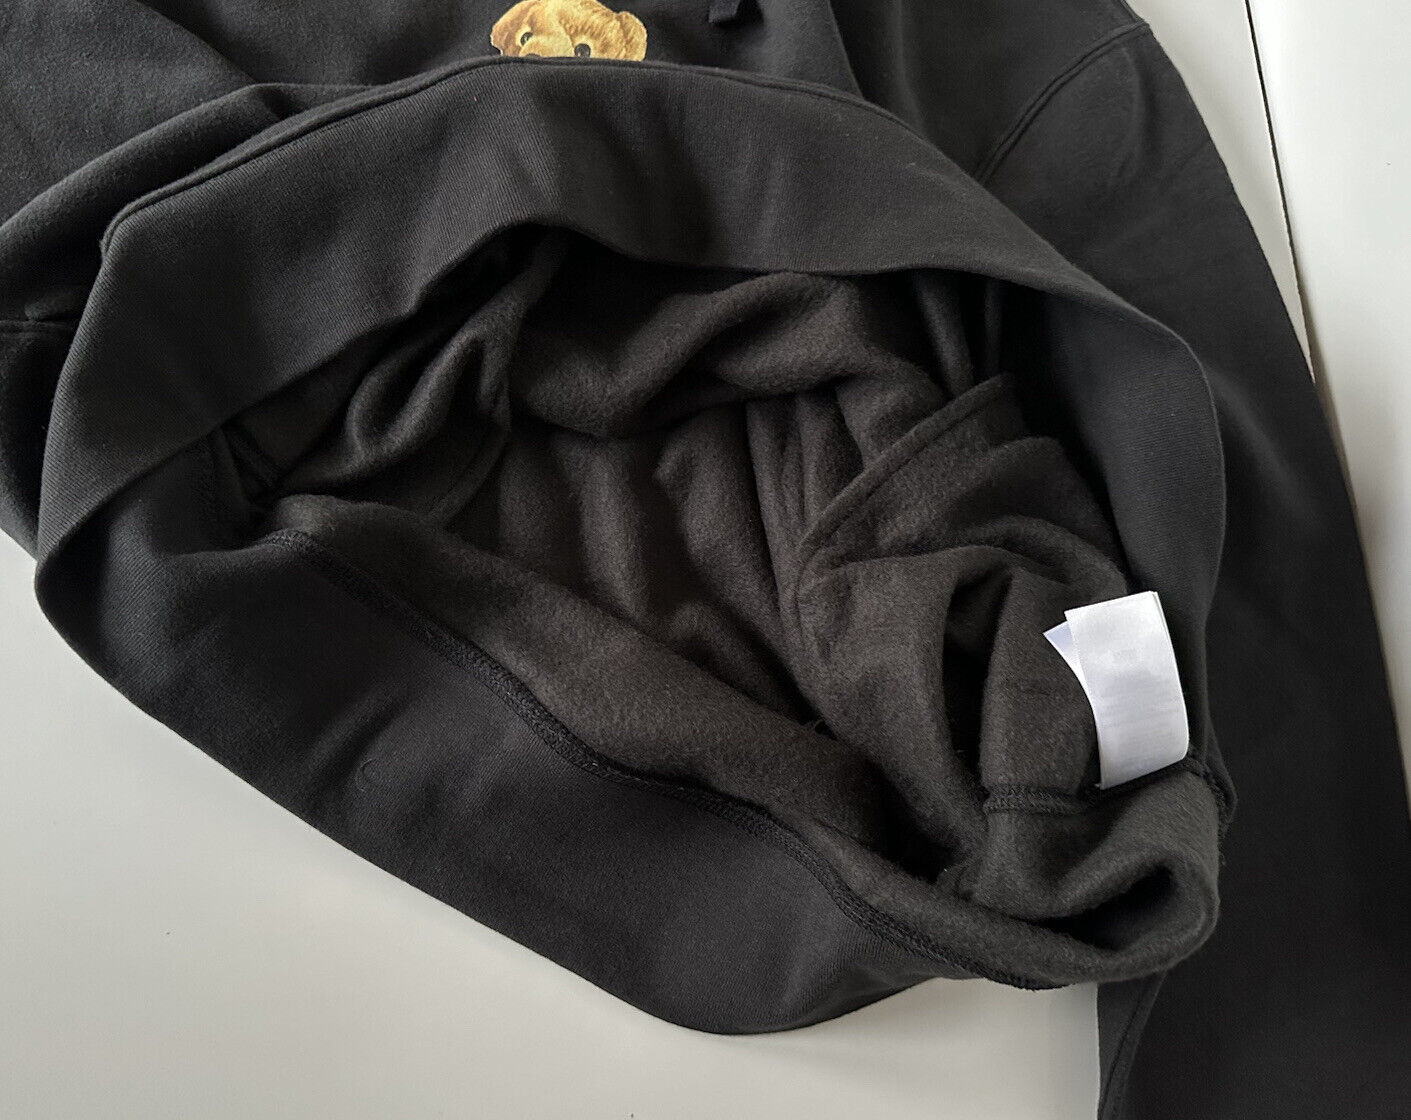 Neu mit Etikett: 188 $ Polo Ralph Lauren Bear Sweatshirt mit Kapuze Schwarz 2XLT/2TGL 